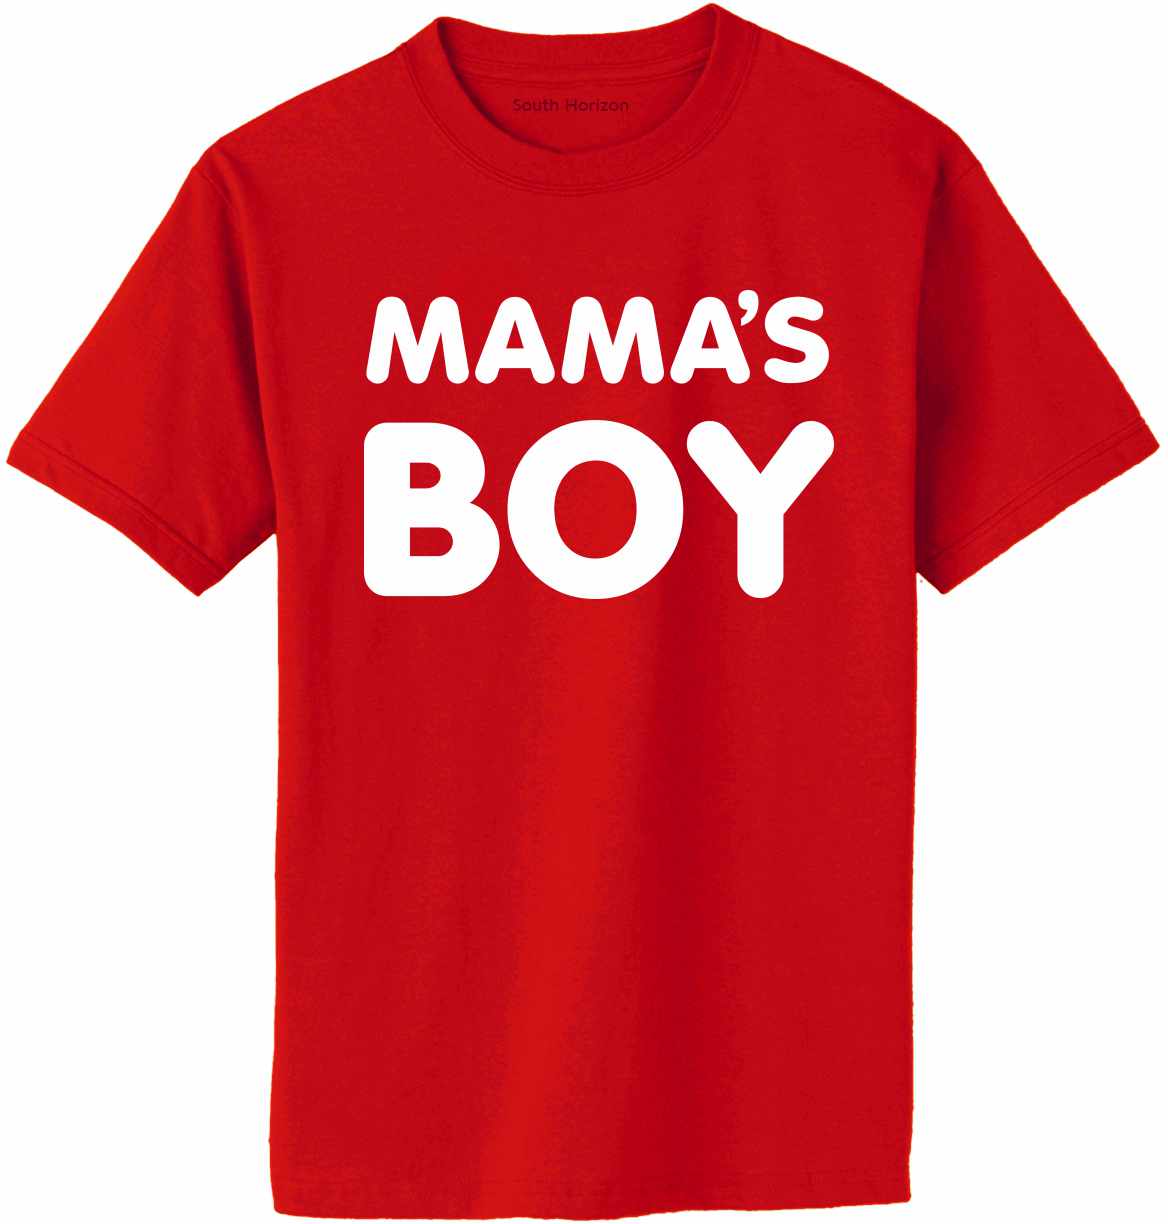 MAMA'S BOY on Adult T-Shirt